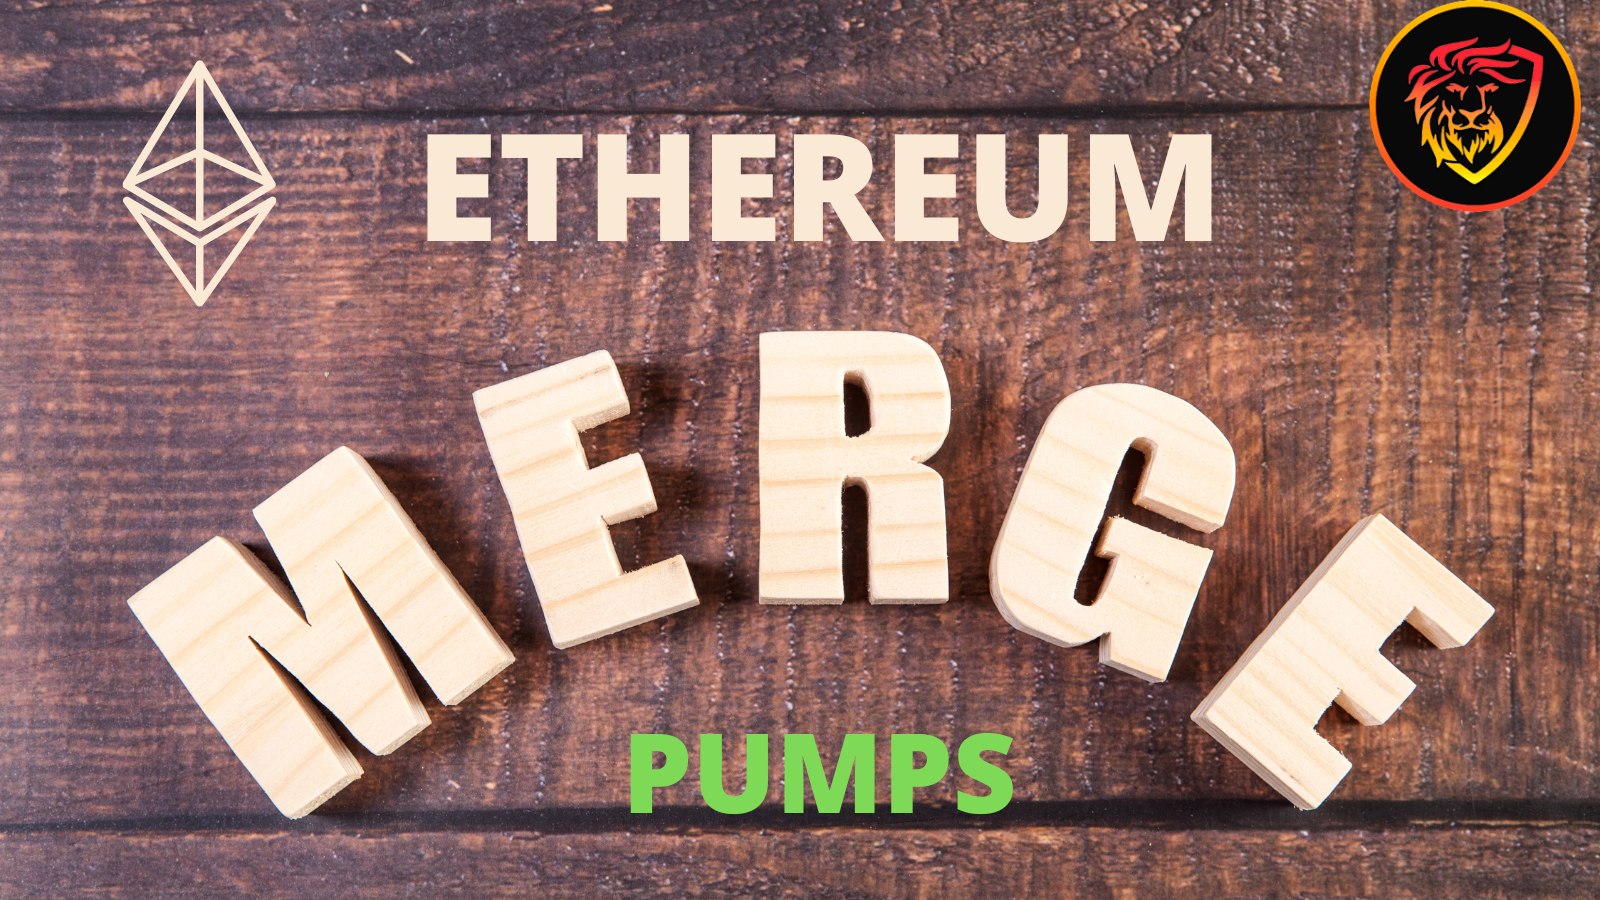 ethereum merge pumps what is merge eth .png